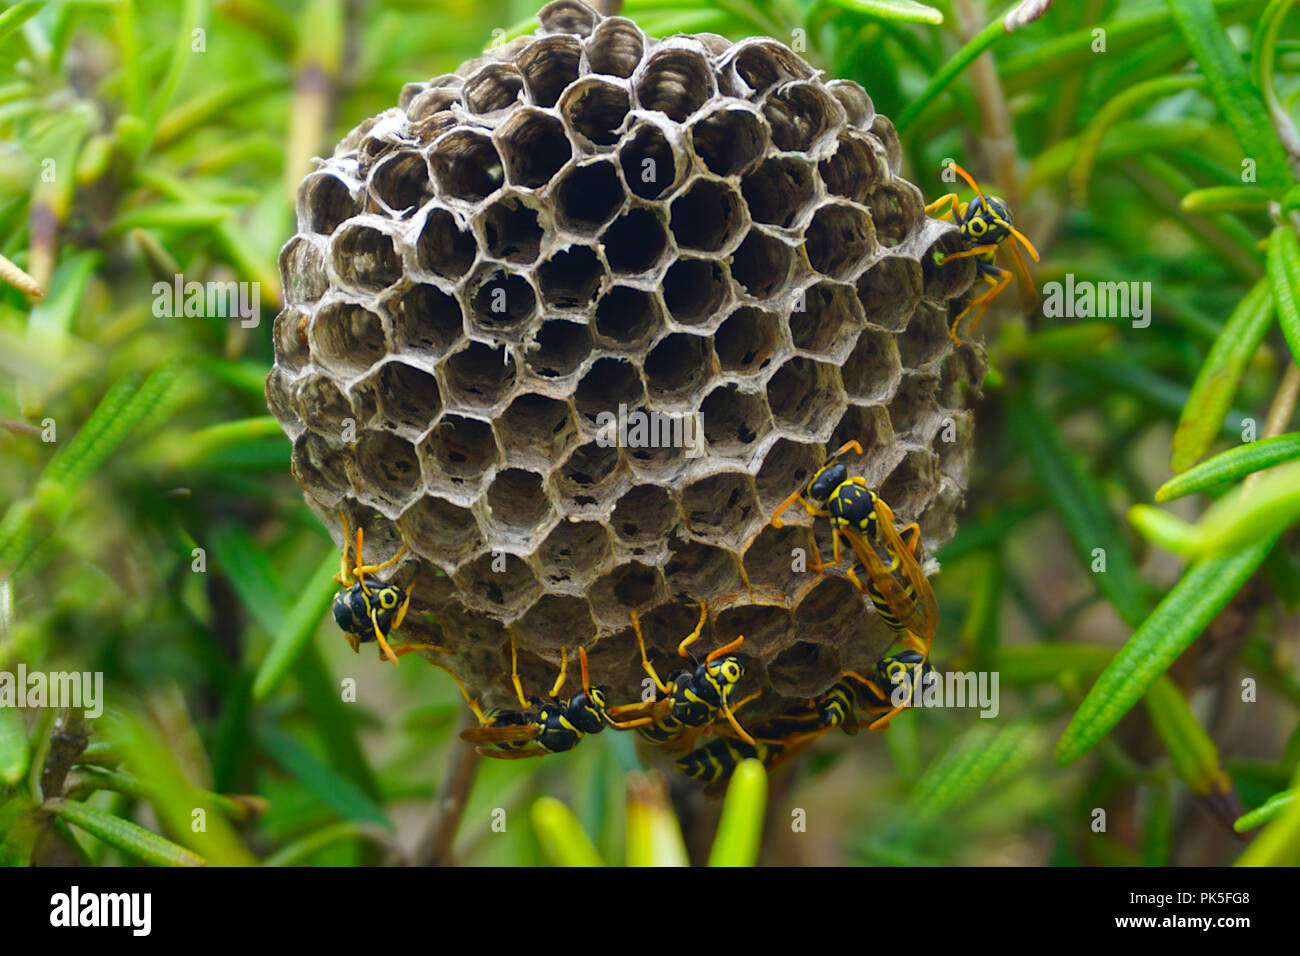 Vespiary or colony of social wasps Vespula Vulgaris on Mediterranean bush of rosemary Stock Photo